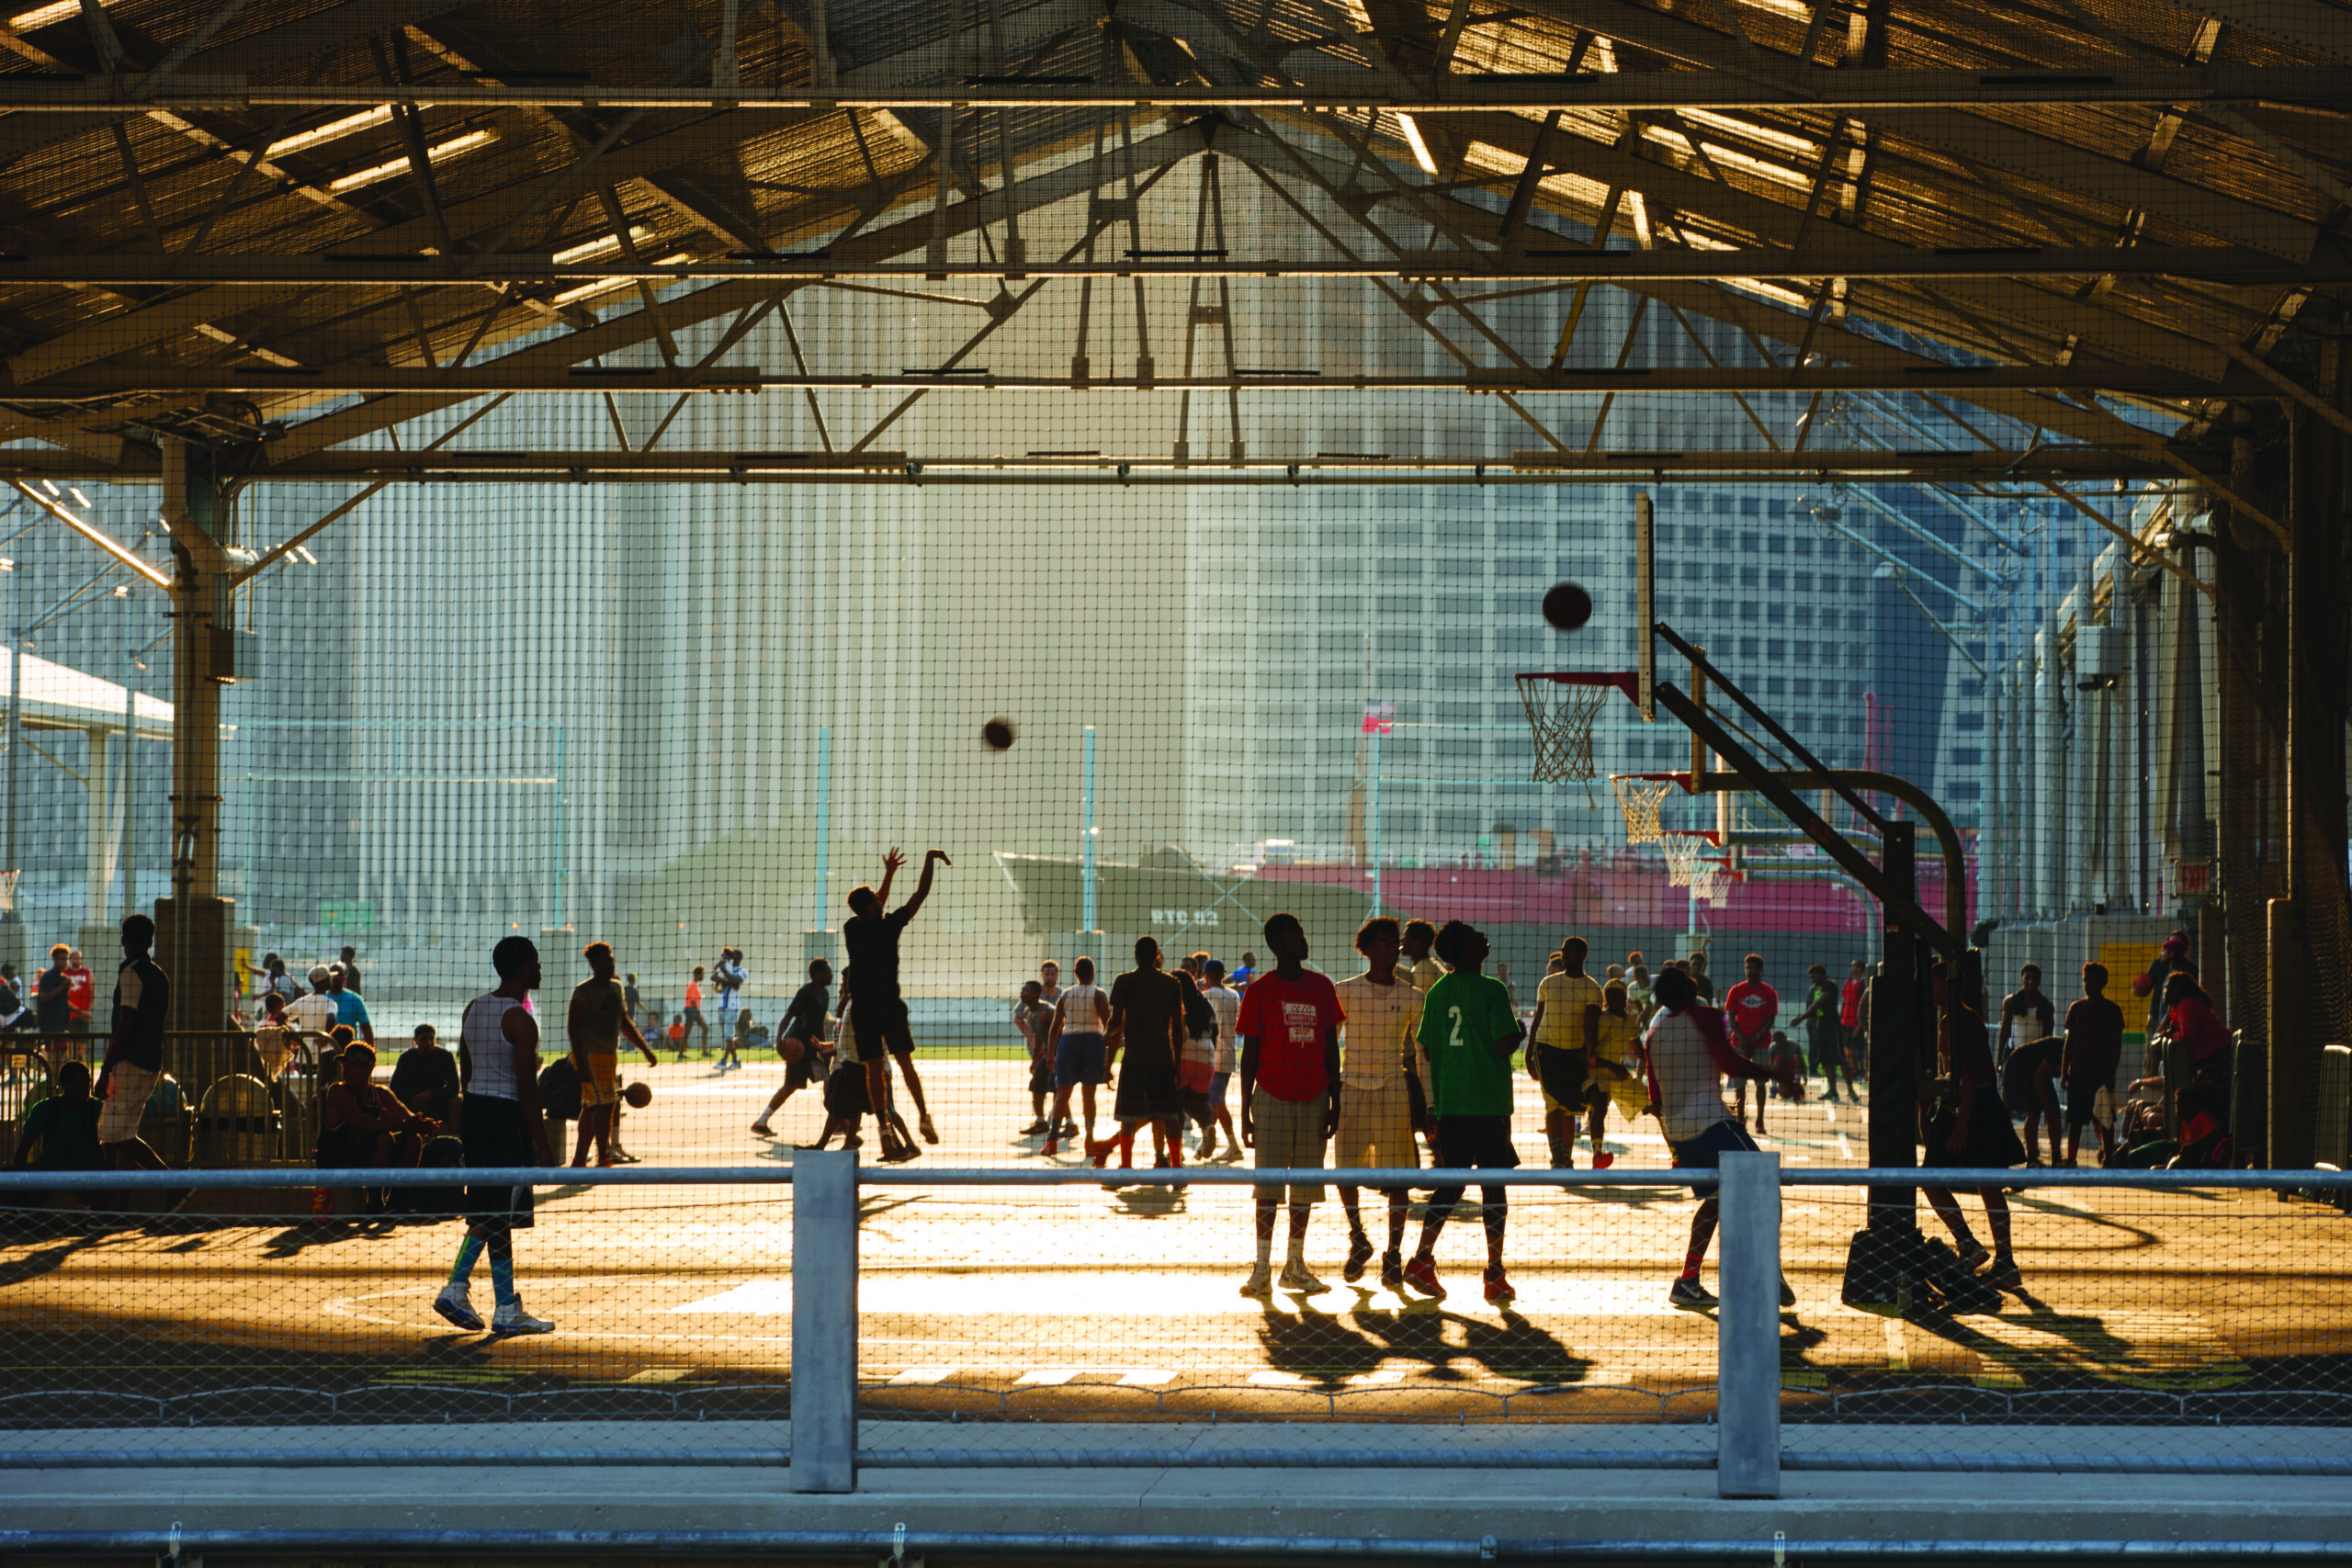 Brooklyn Bridge Park basketball courts. Photo: Scott Shigley